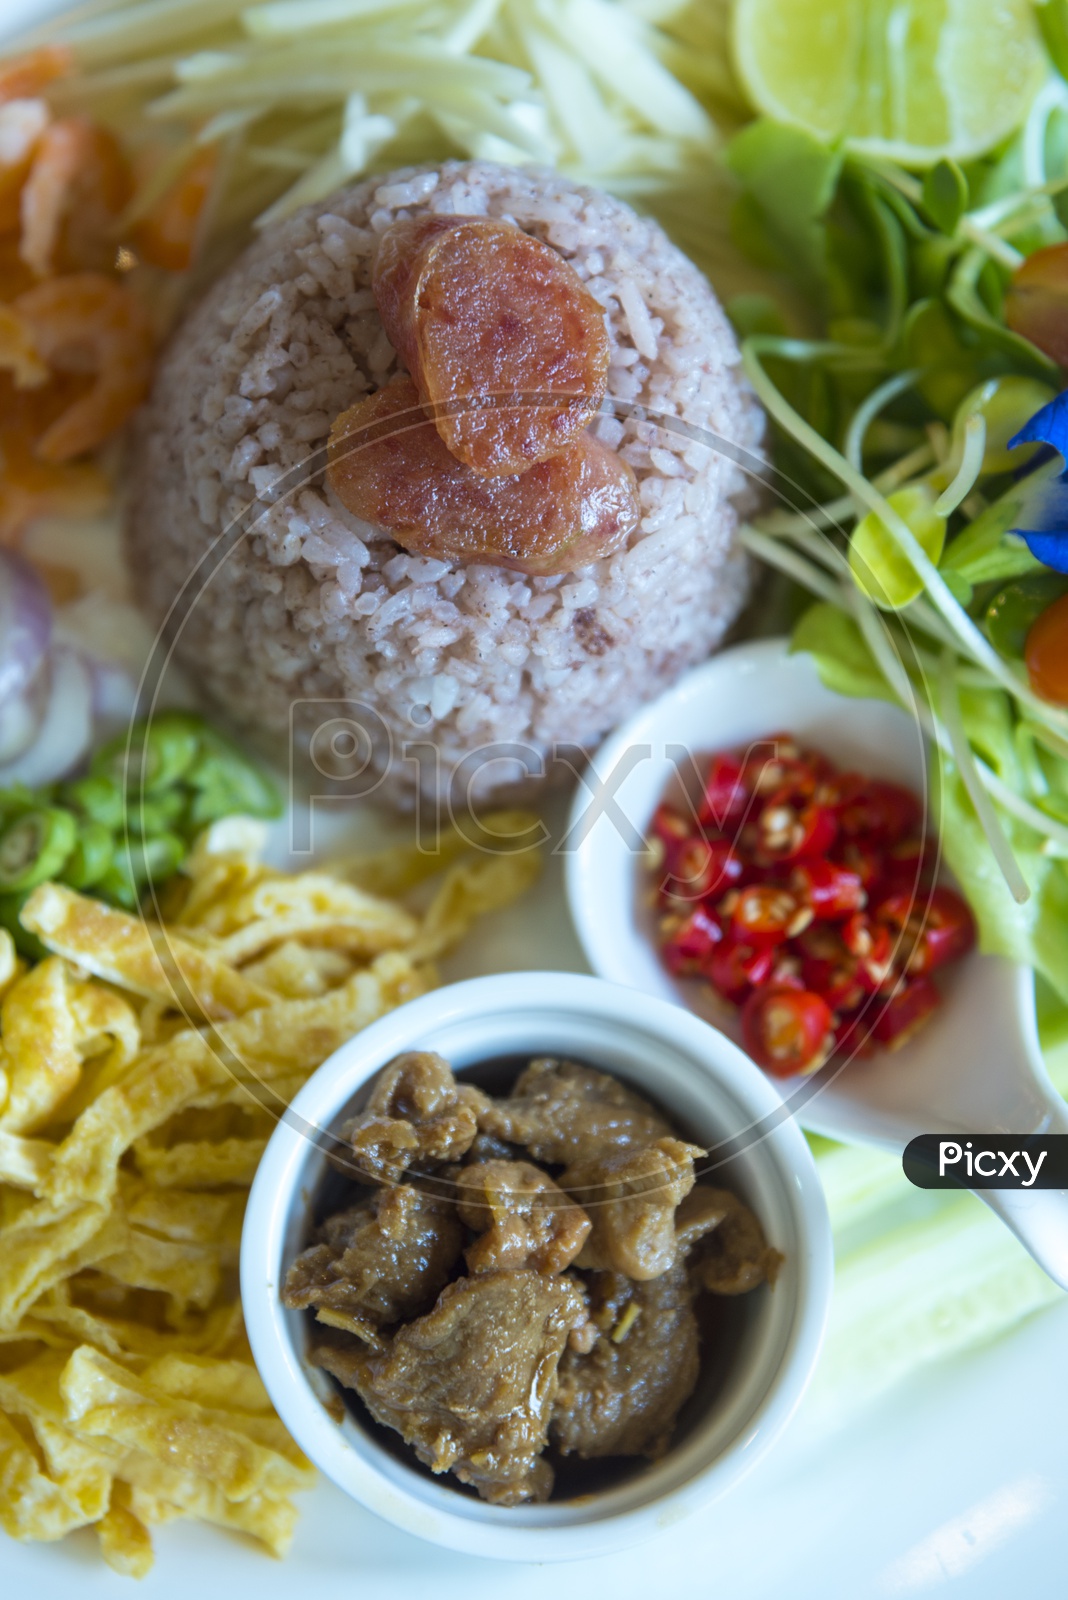 Thai Food, Rice Platter  With Pork, Shrimp or Prawn and Veggies Served Closeup